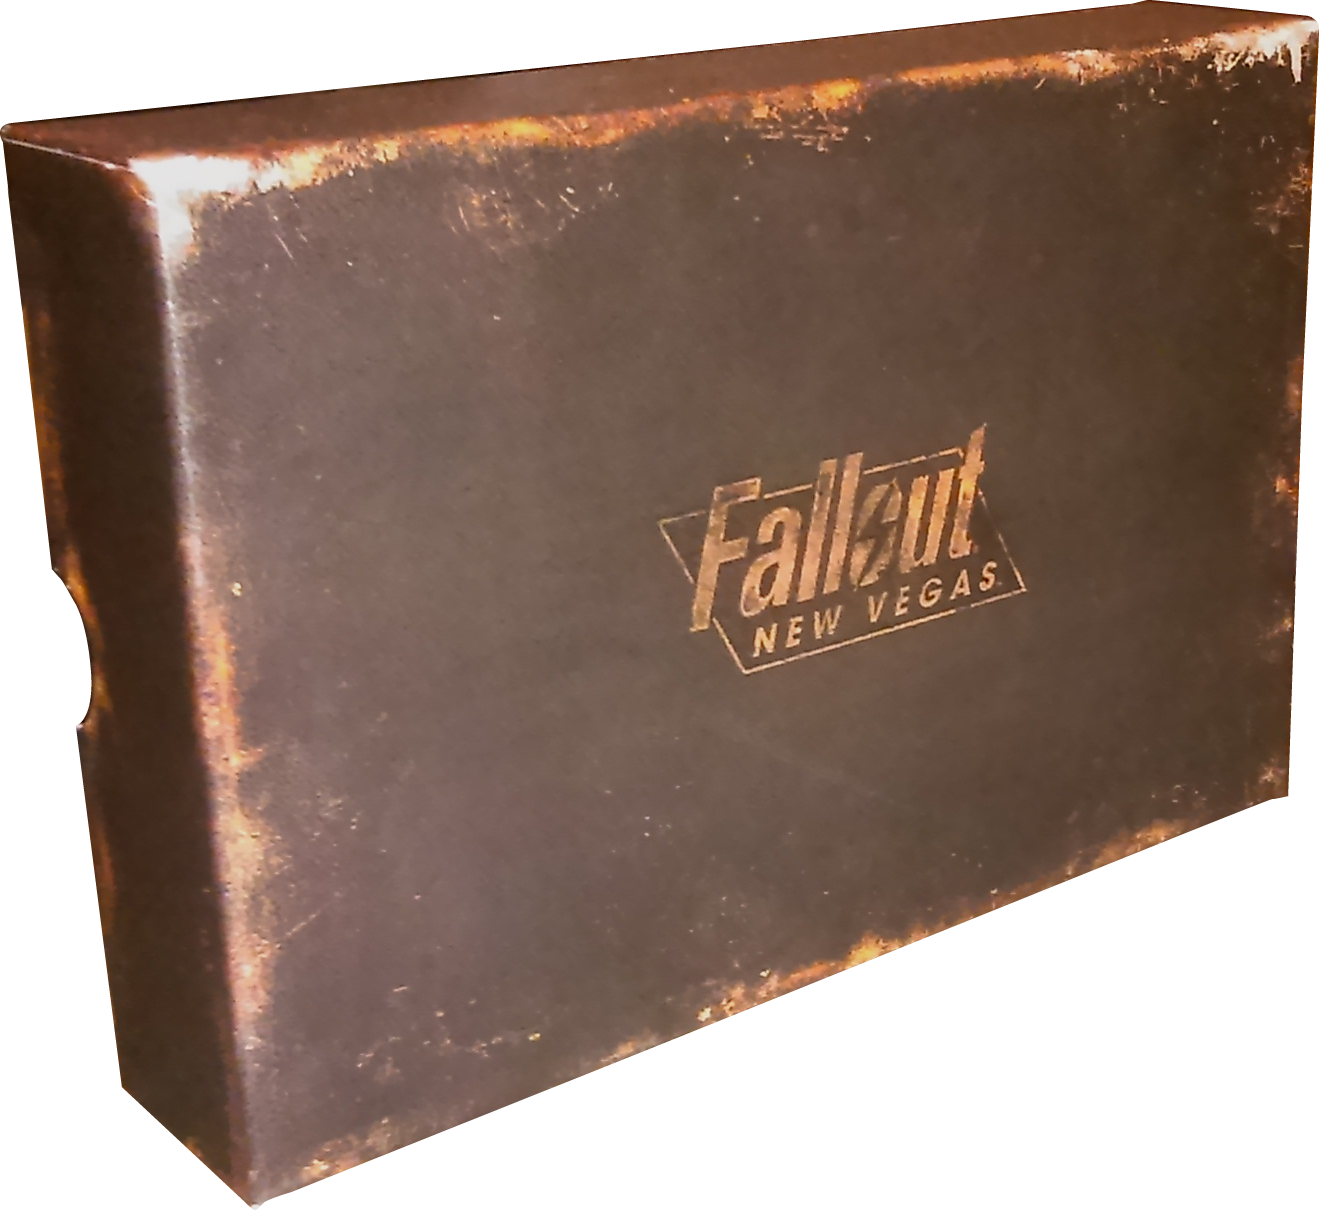 Fallout: New Vegas promotional items | Fallout Wiki | Fandom